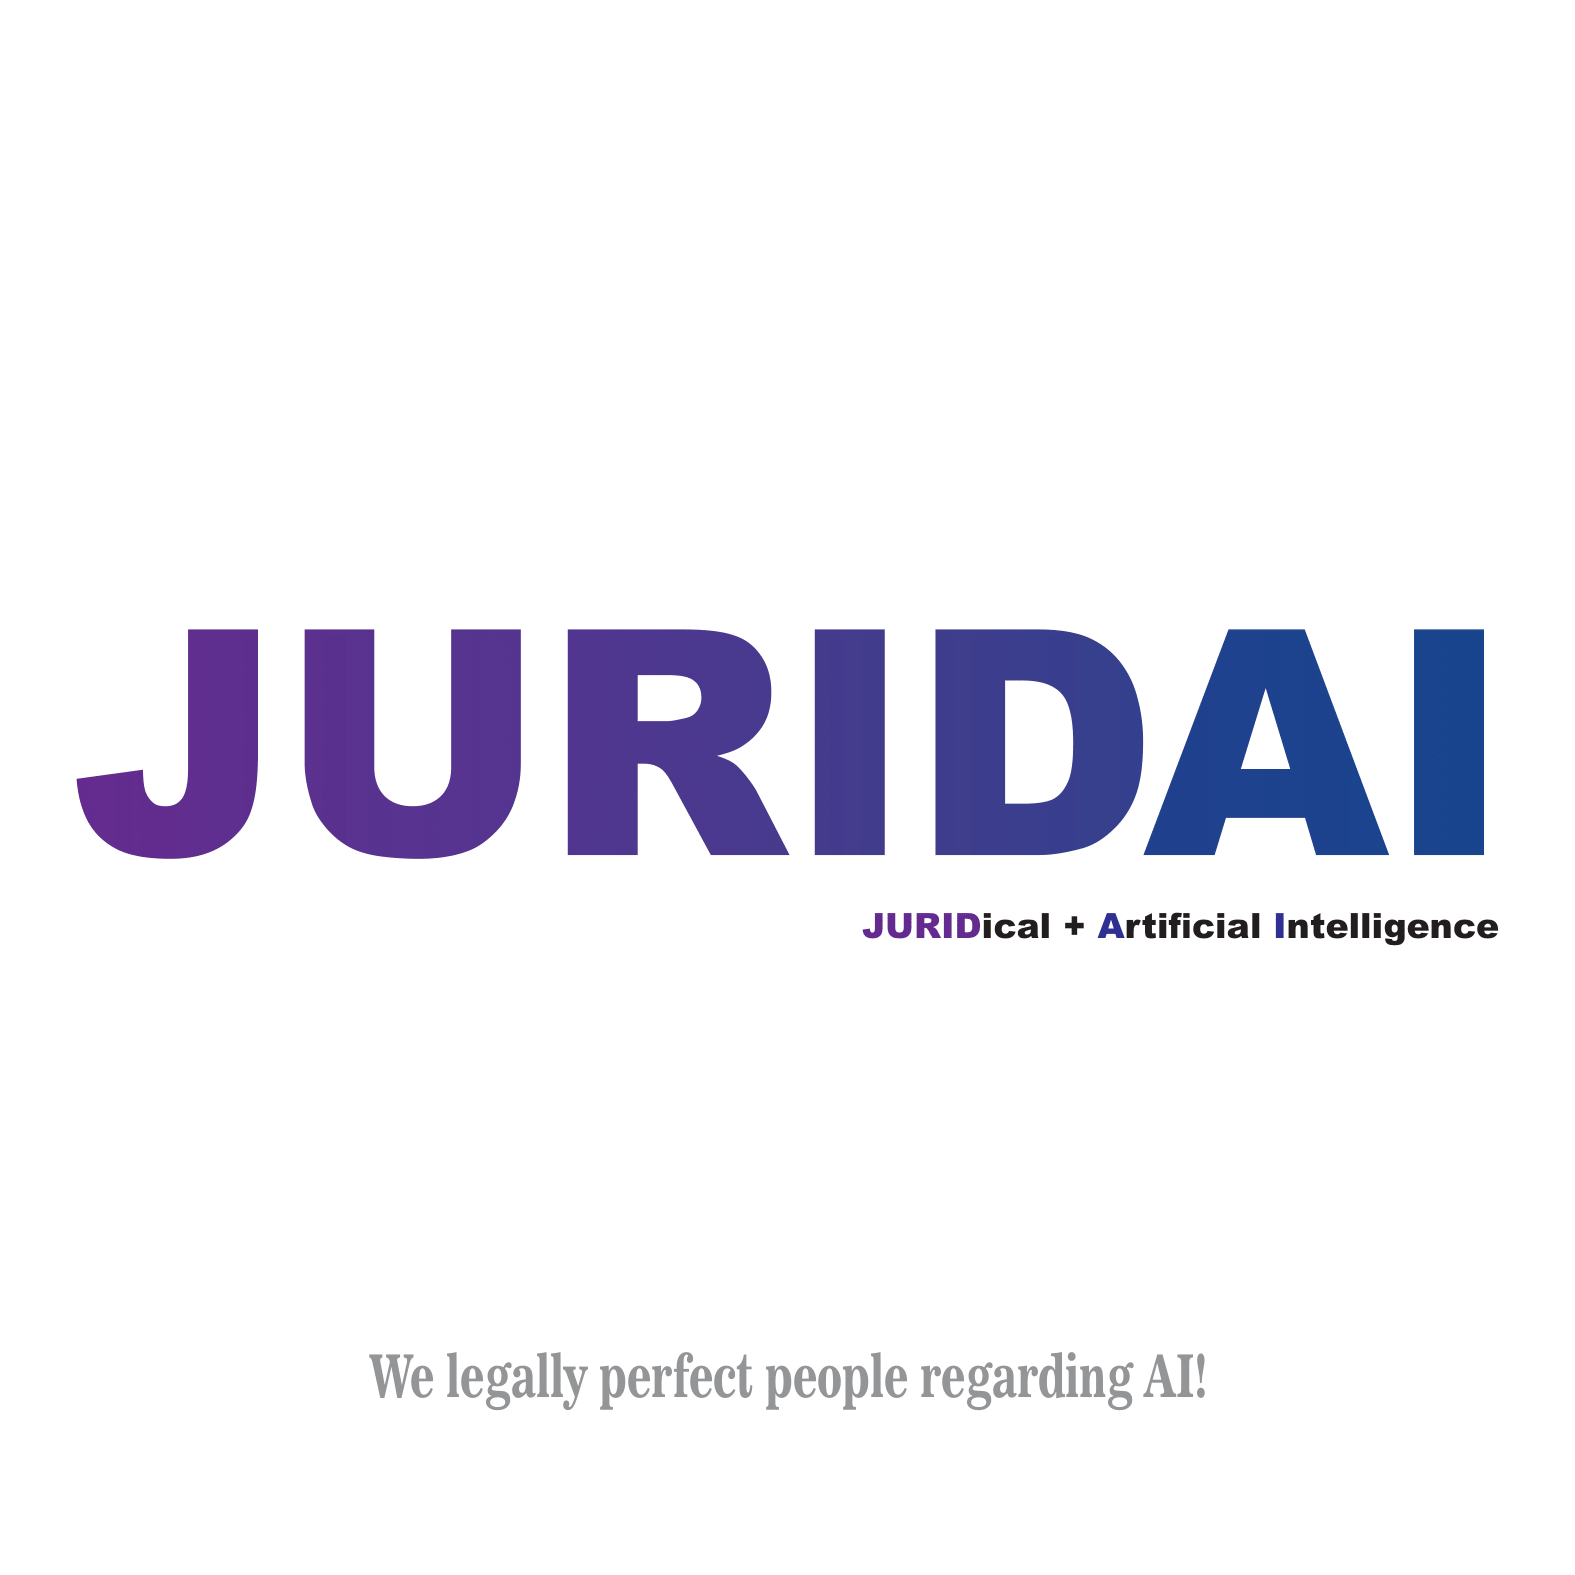 Derecho - Jurídia